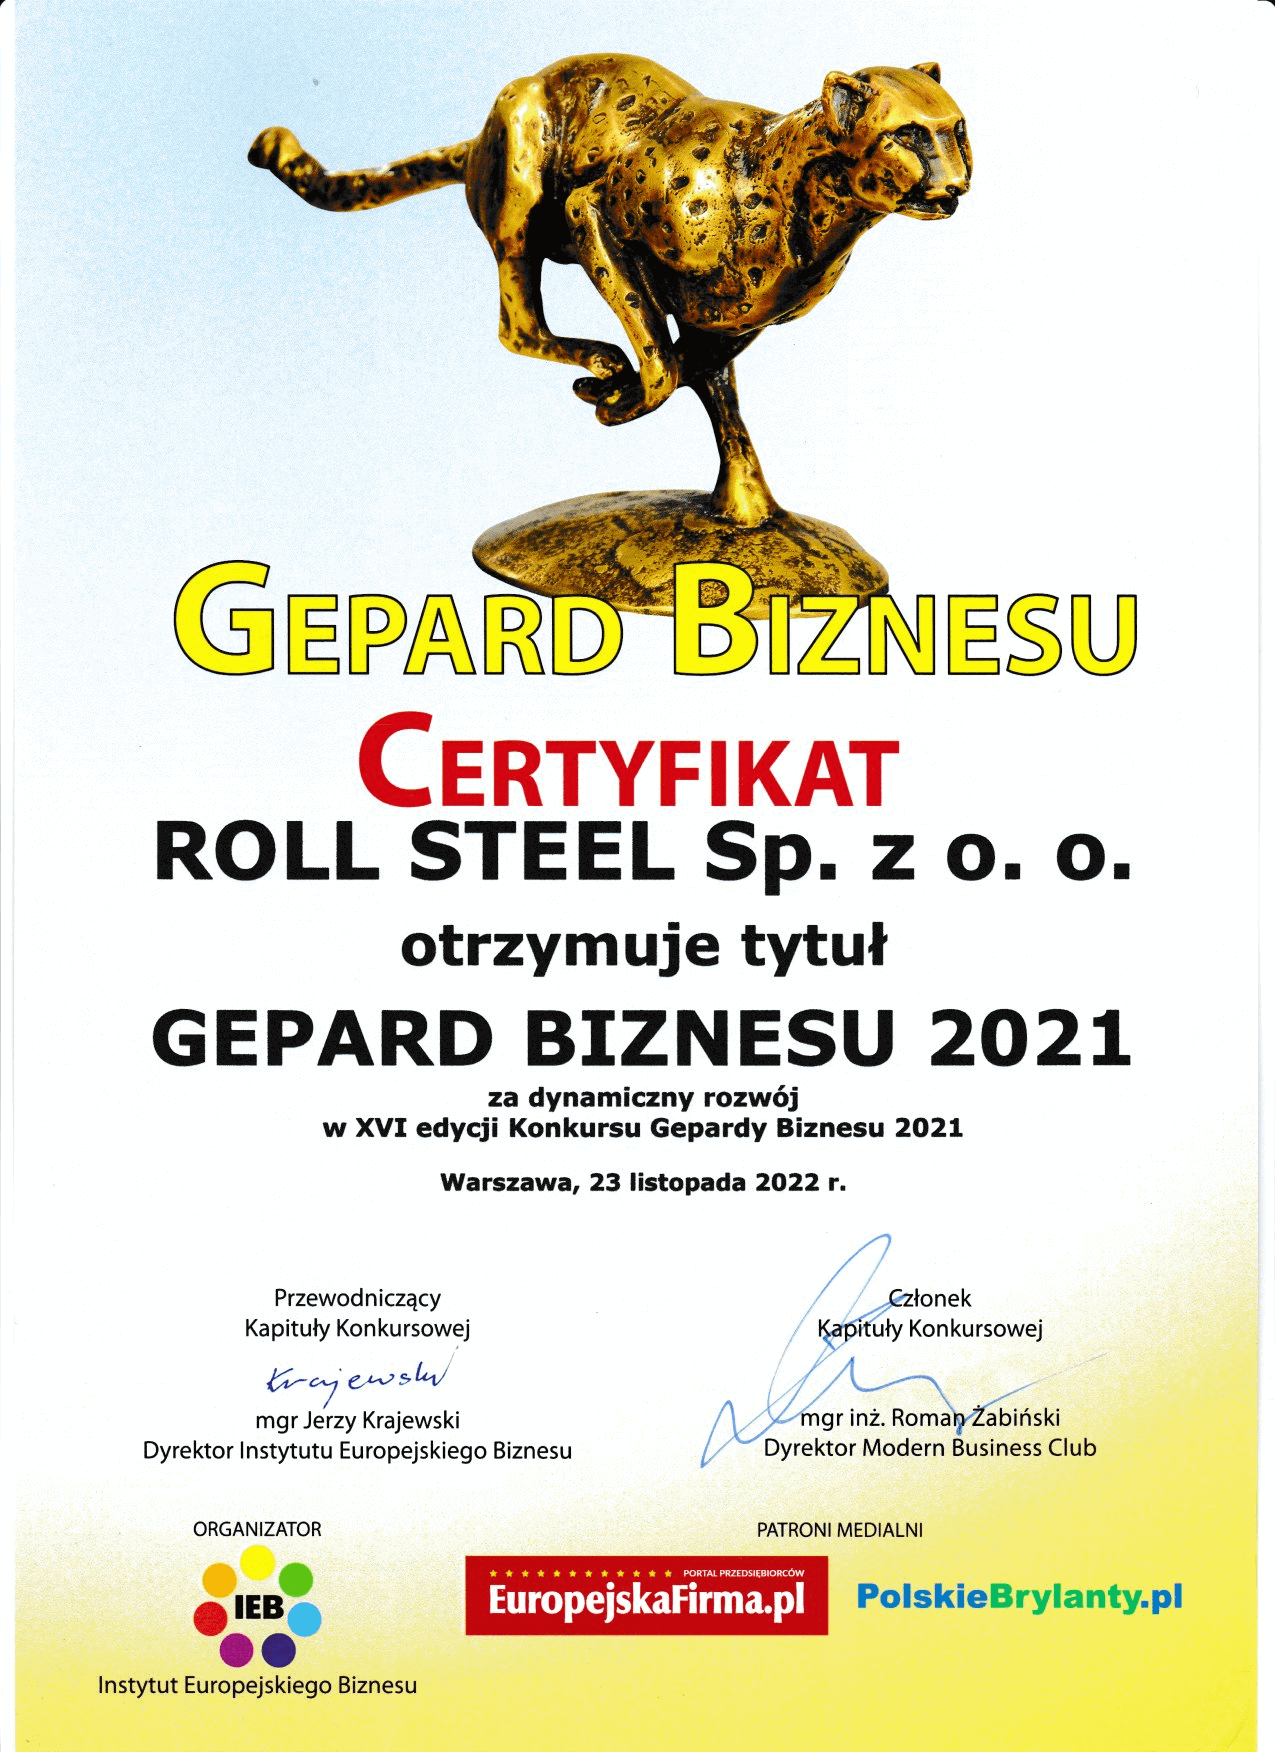 Gepard Biznesu 2021(1)